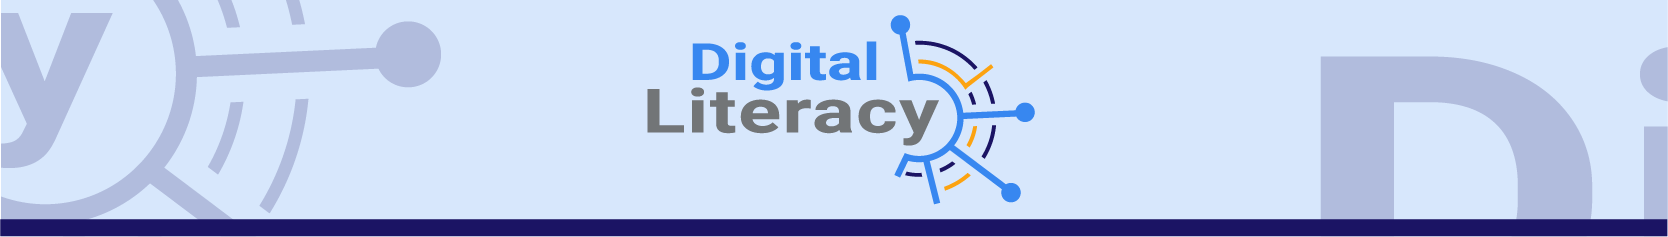 Digital Literacy banner